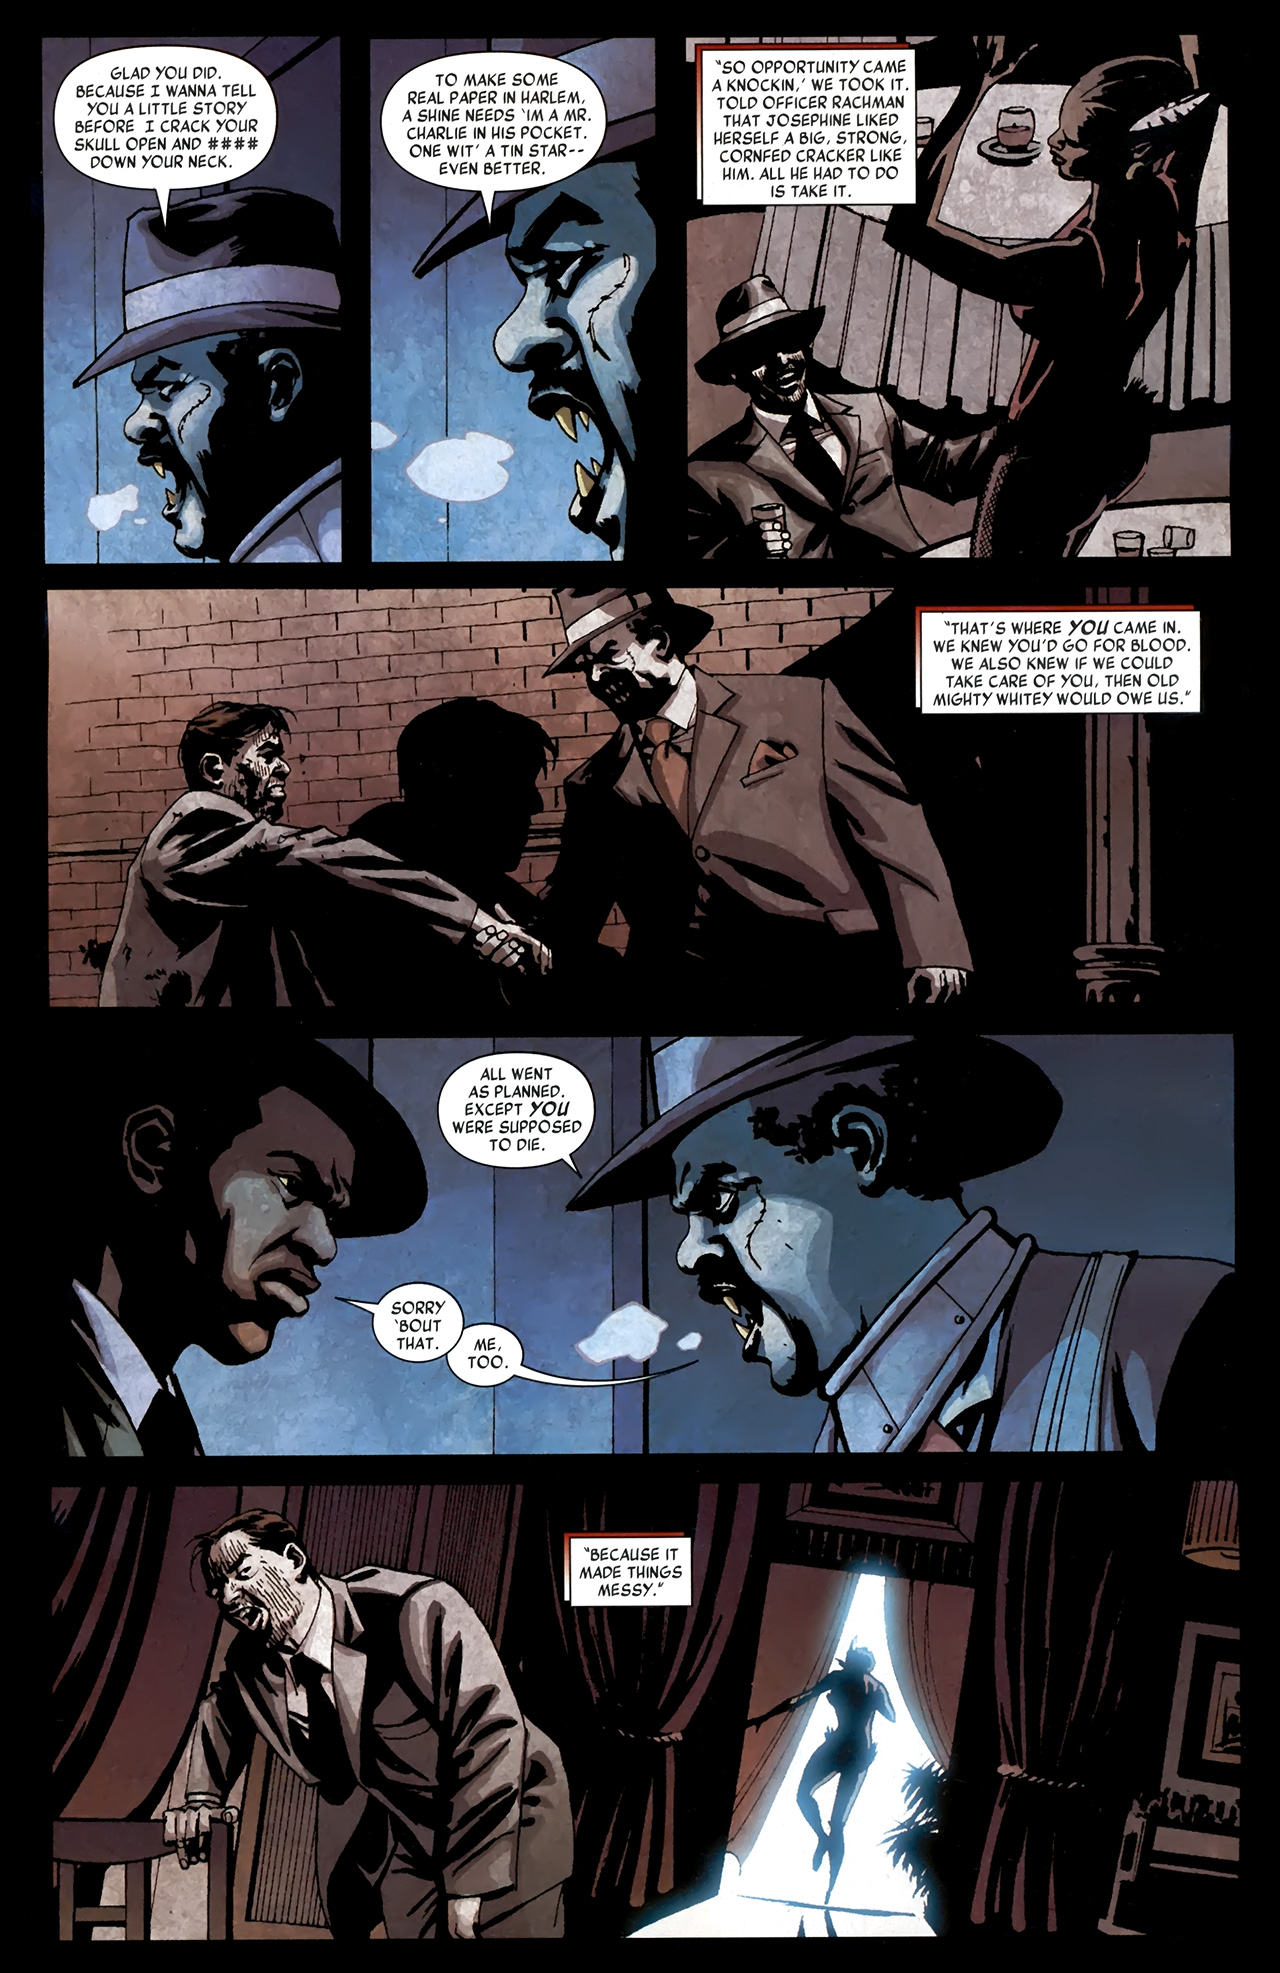 Luke Cage Noir #4 (of 4) - Moon Over Harlem, Part 4 